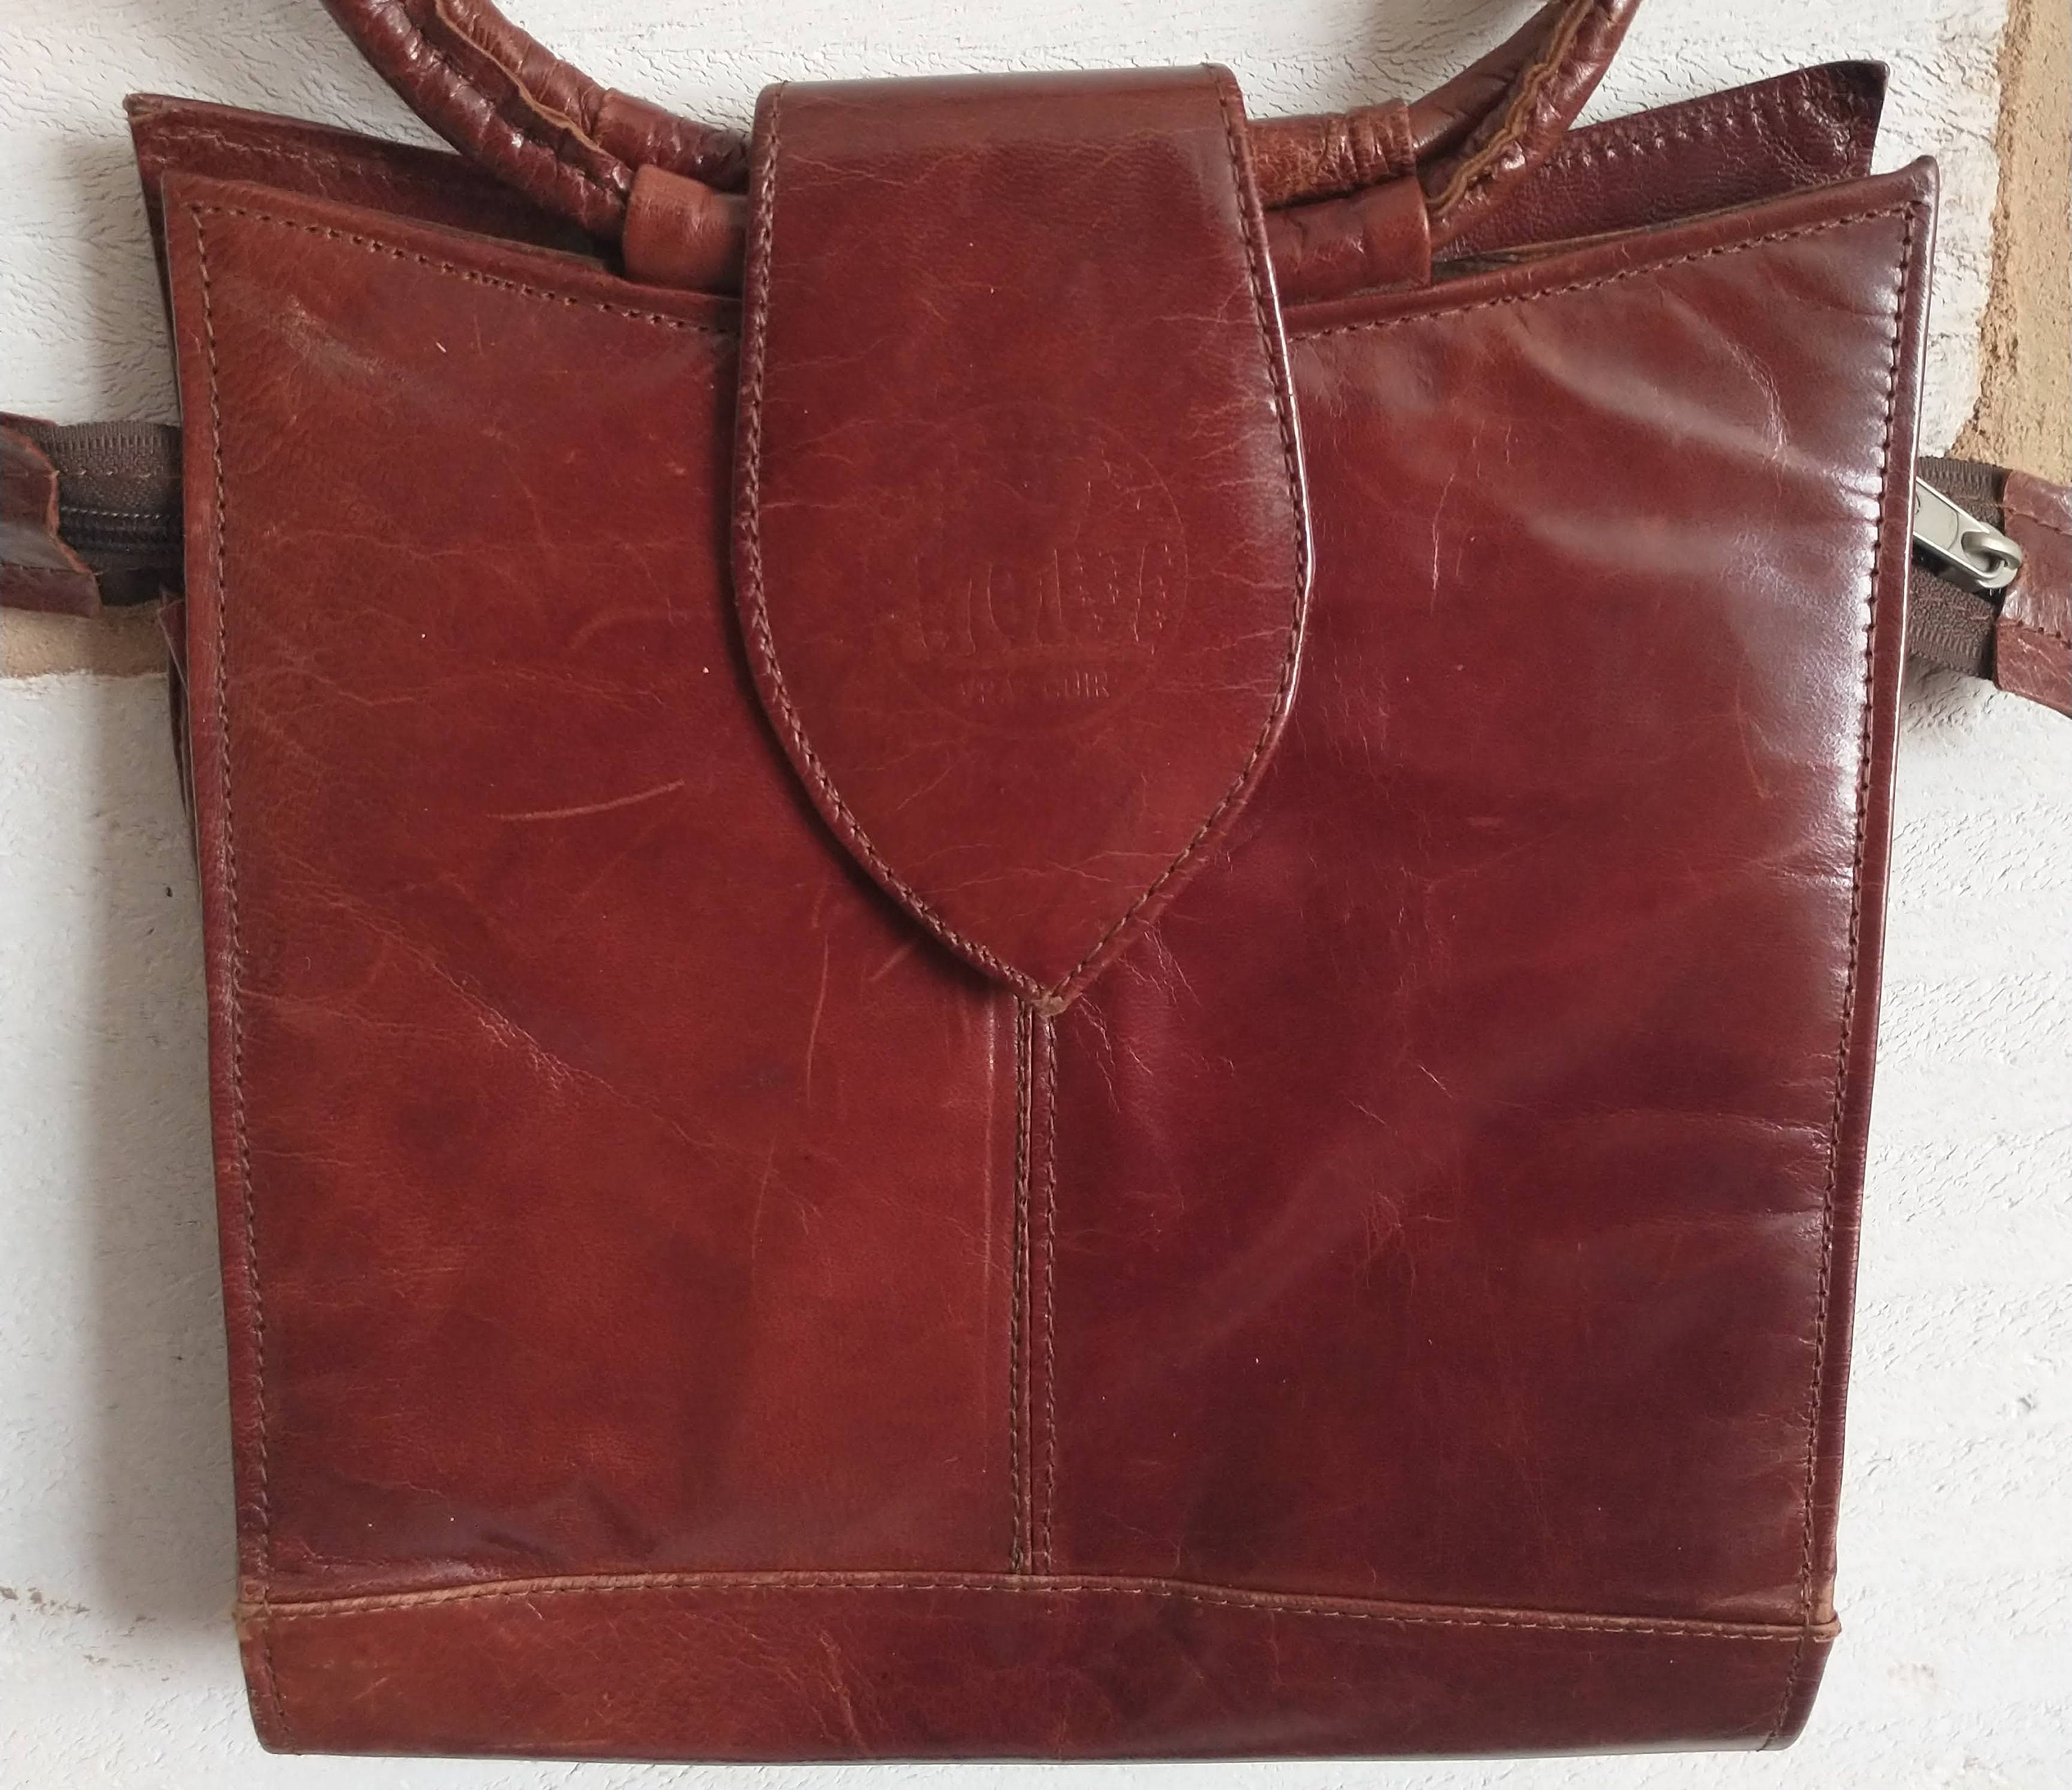 Vtg Maria Carla Italian Style Leather Bag 90s Crossbody Shoulder Purse Red